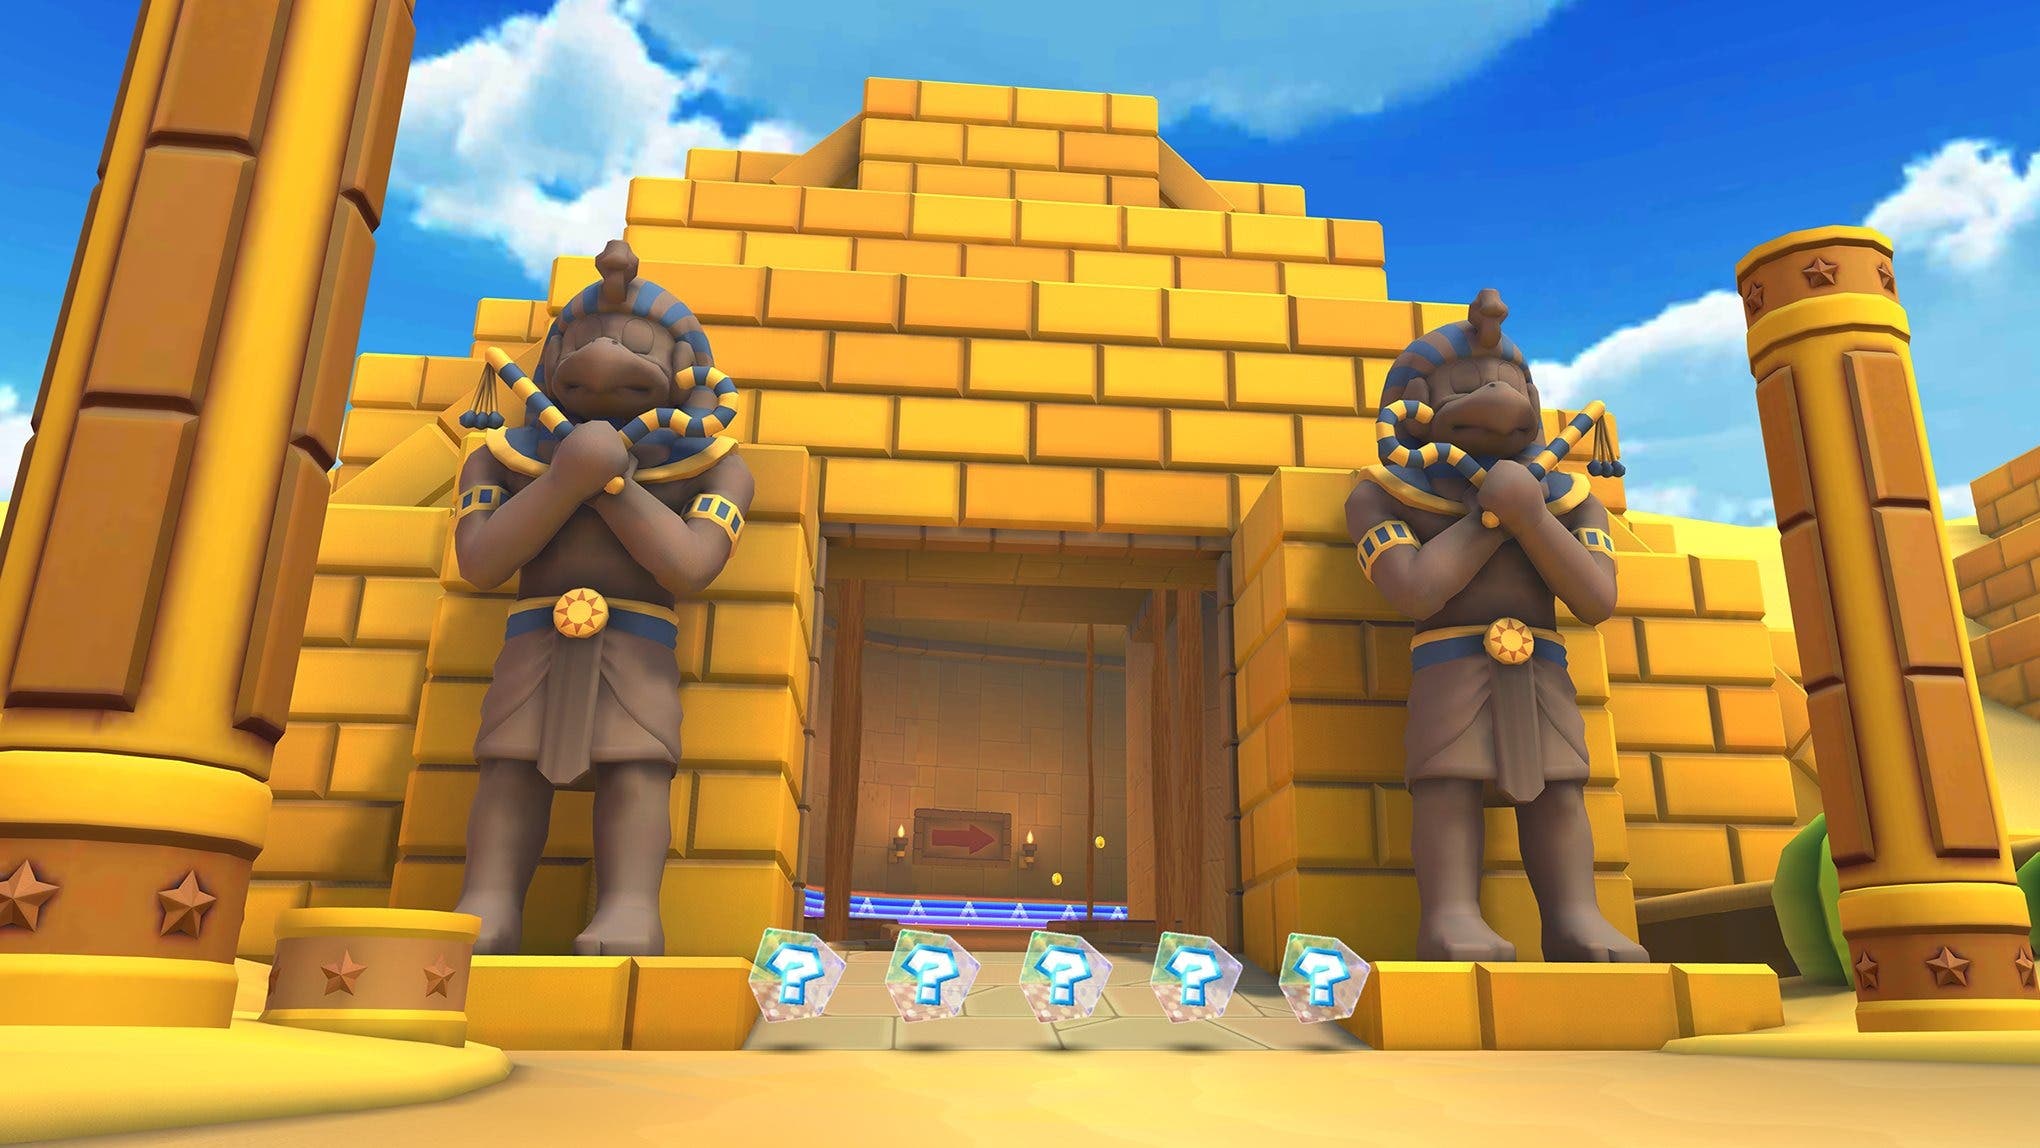 Vistazo detallado a Wii Ruinas Seco-Seco en Mario Kart Tour